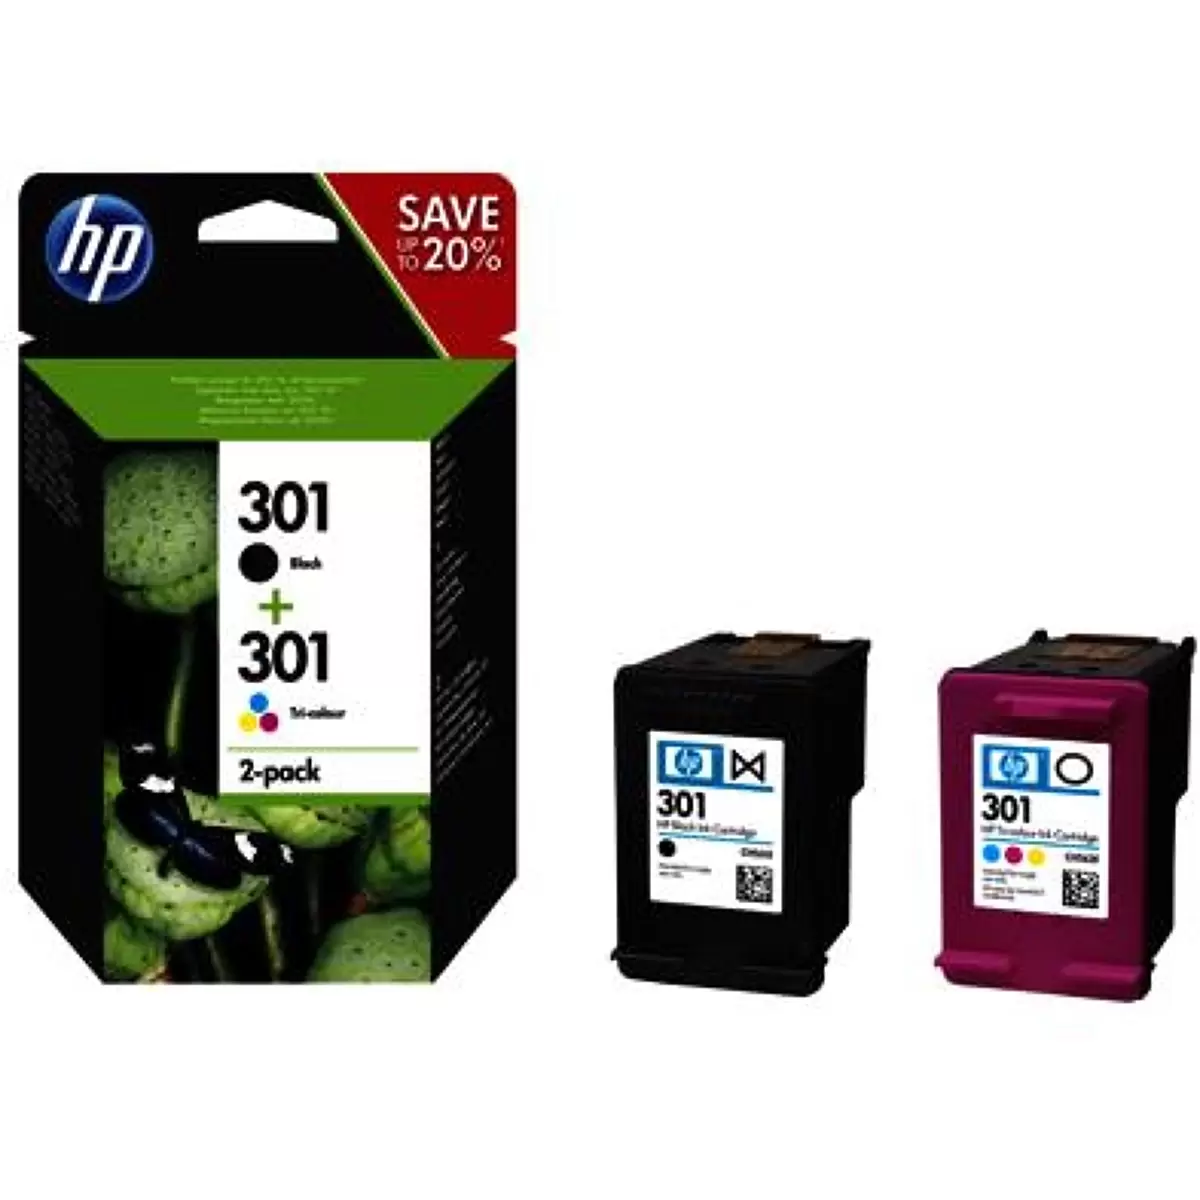 HP 301 Inkt Cartridge Combo 2-Pack